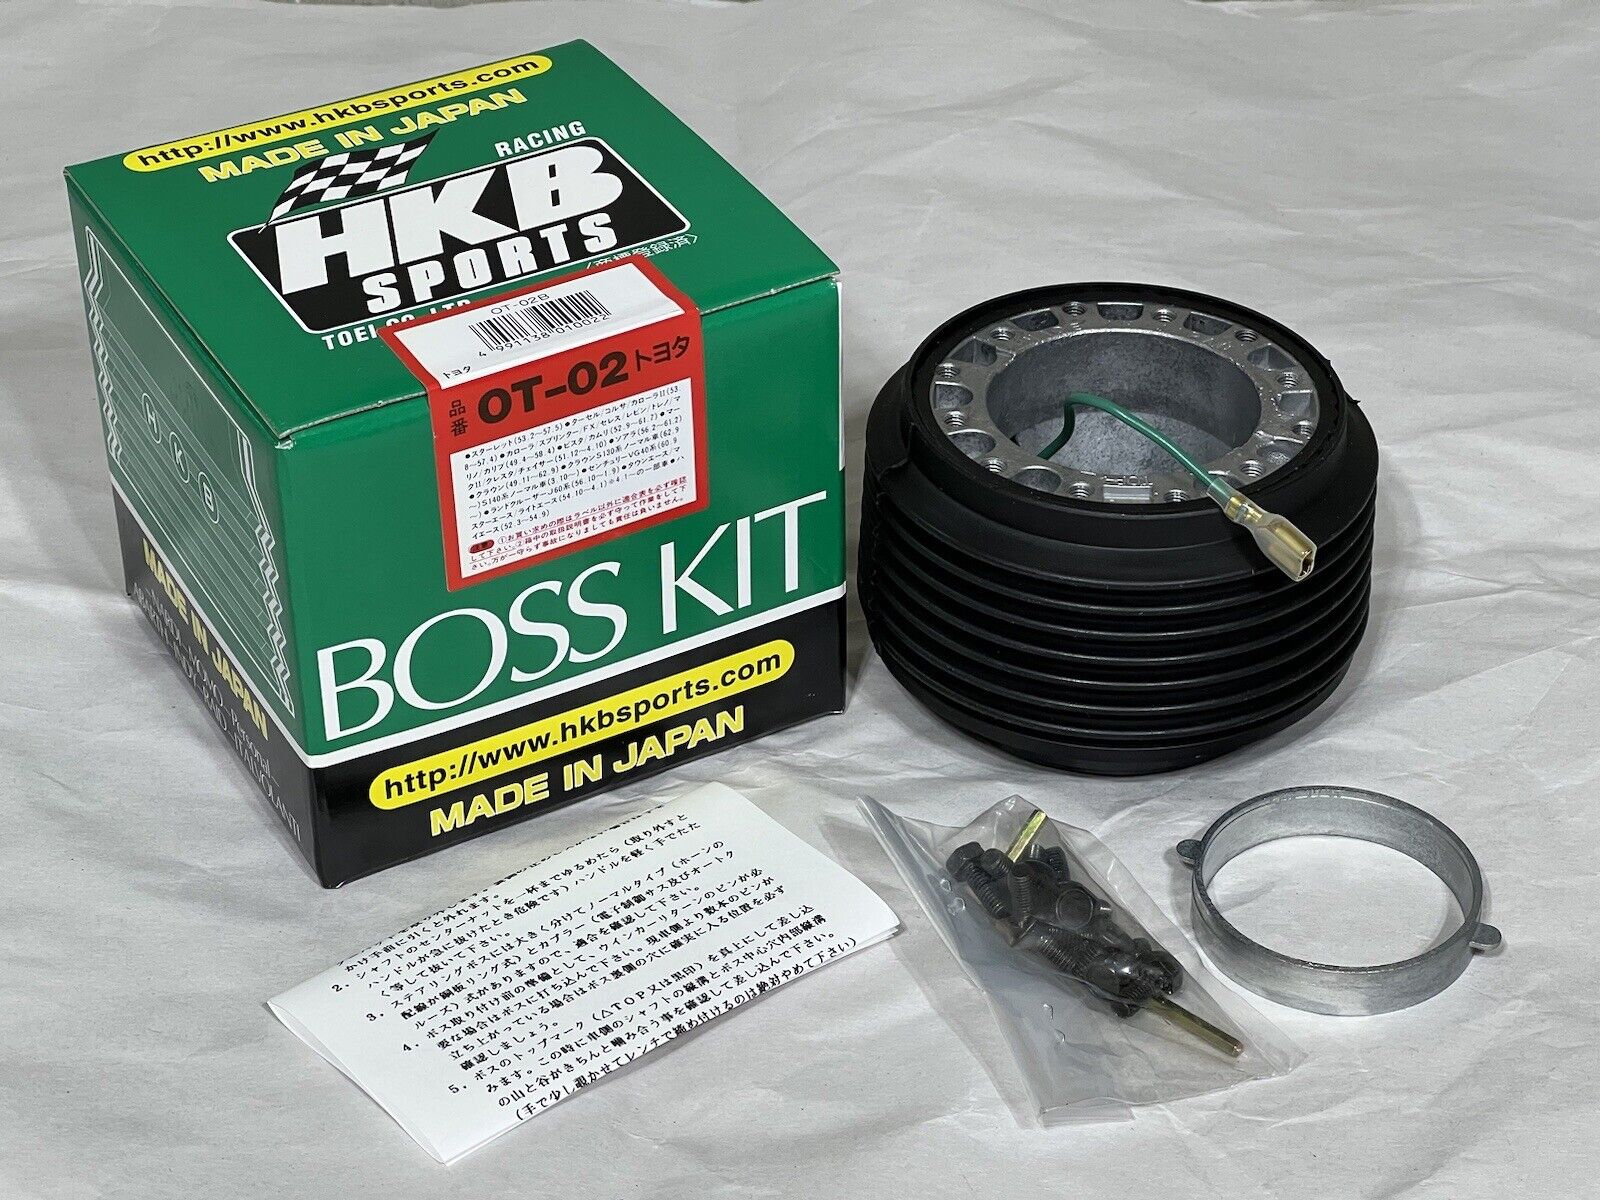 HKB SPORTS Steering Wheel Adapter Kit Boss Kit 81-85 Toyota Soarer MZ10